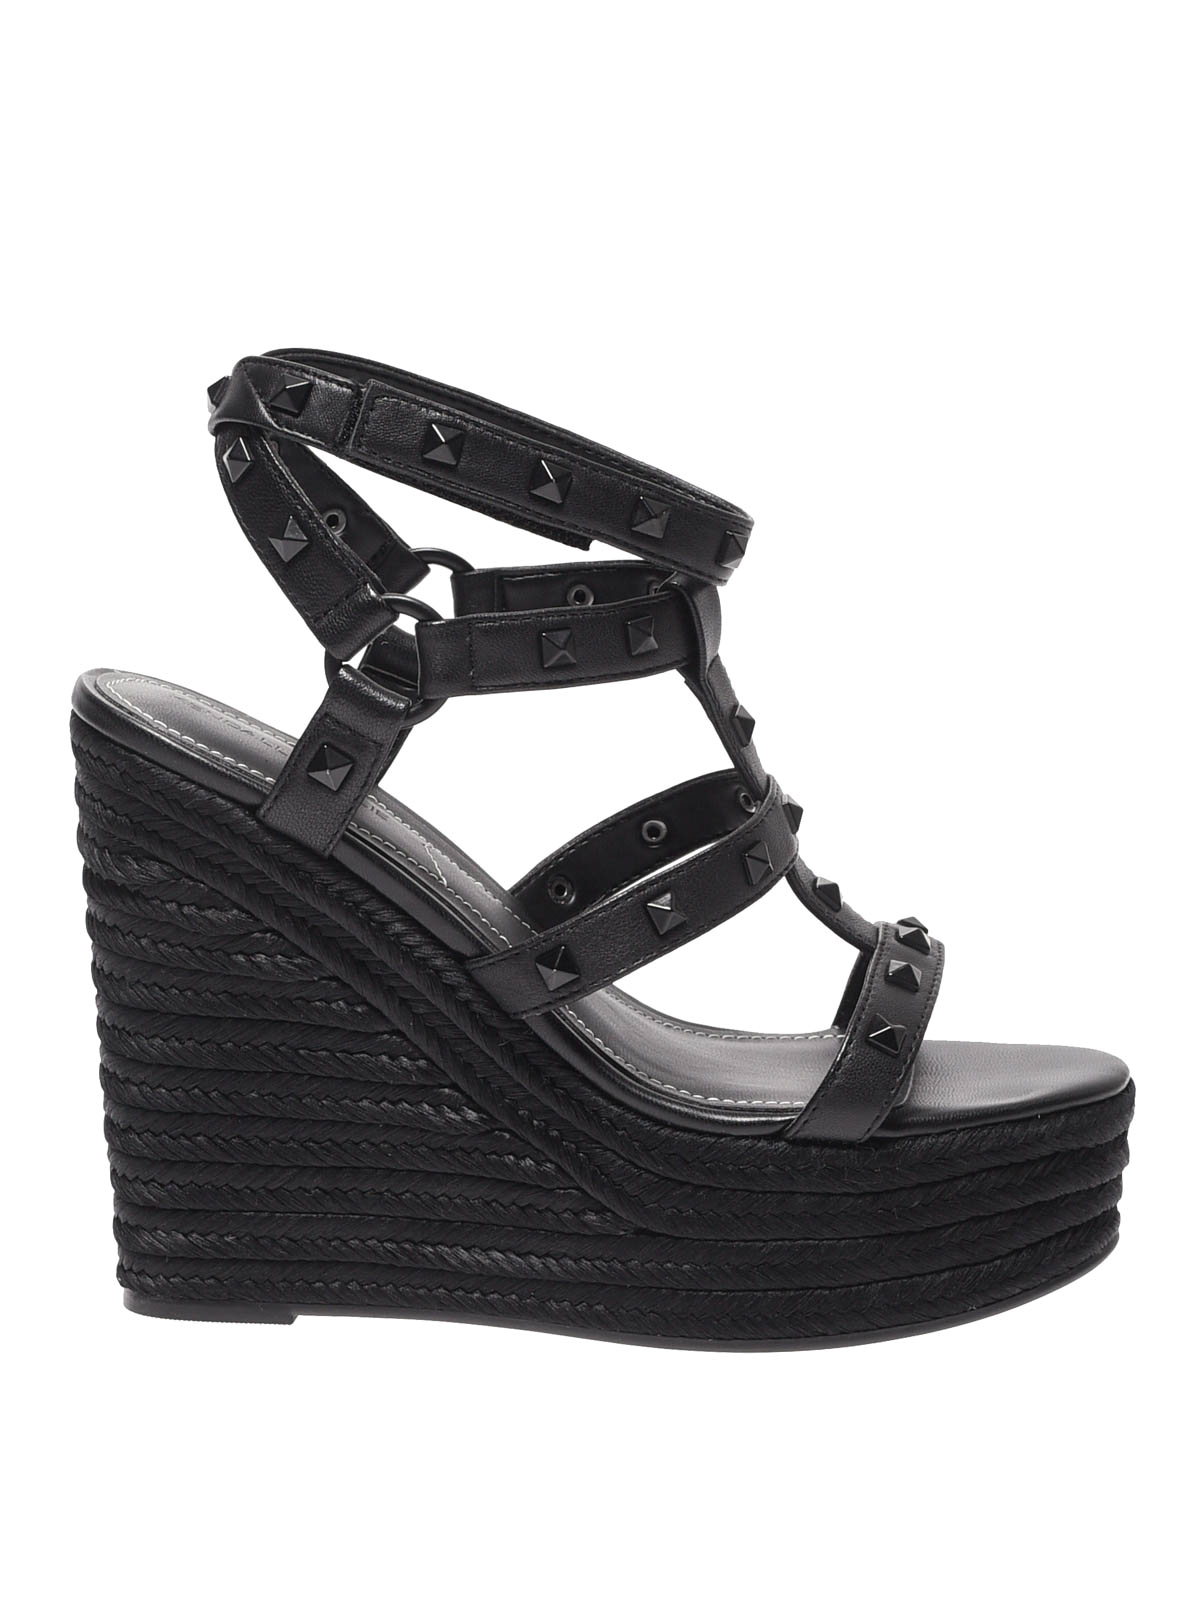 Sandals Kendall + Kylie - Black leather wedge sandals - KKGIVE01